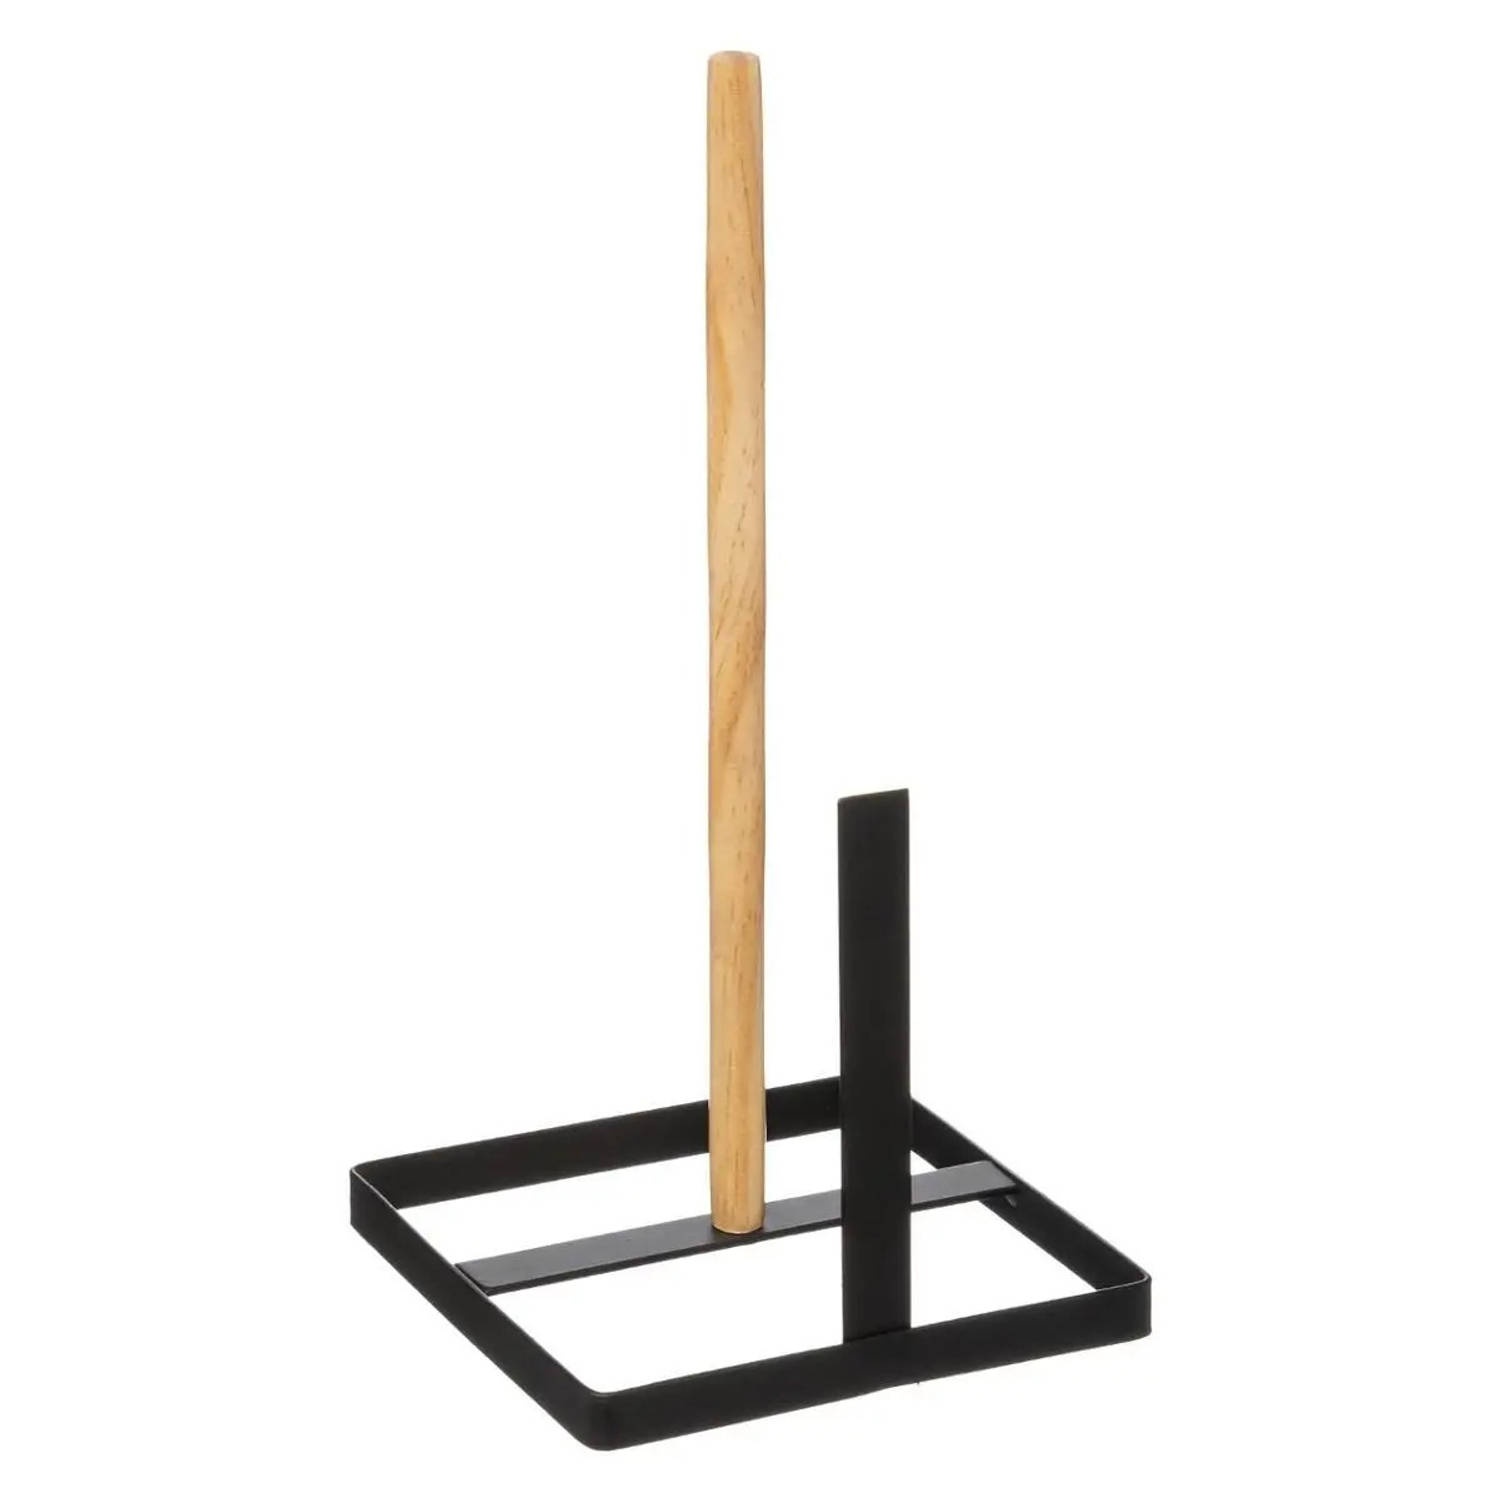 Keukenrolhouder ijzer/hout 15 x 30 cm zwart - Keukenrolhouders